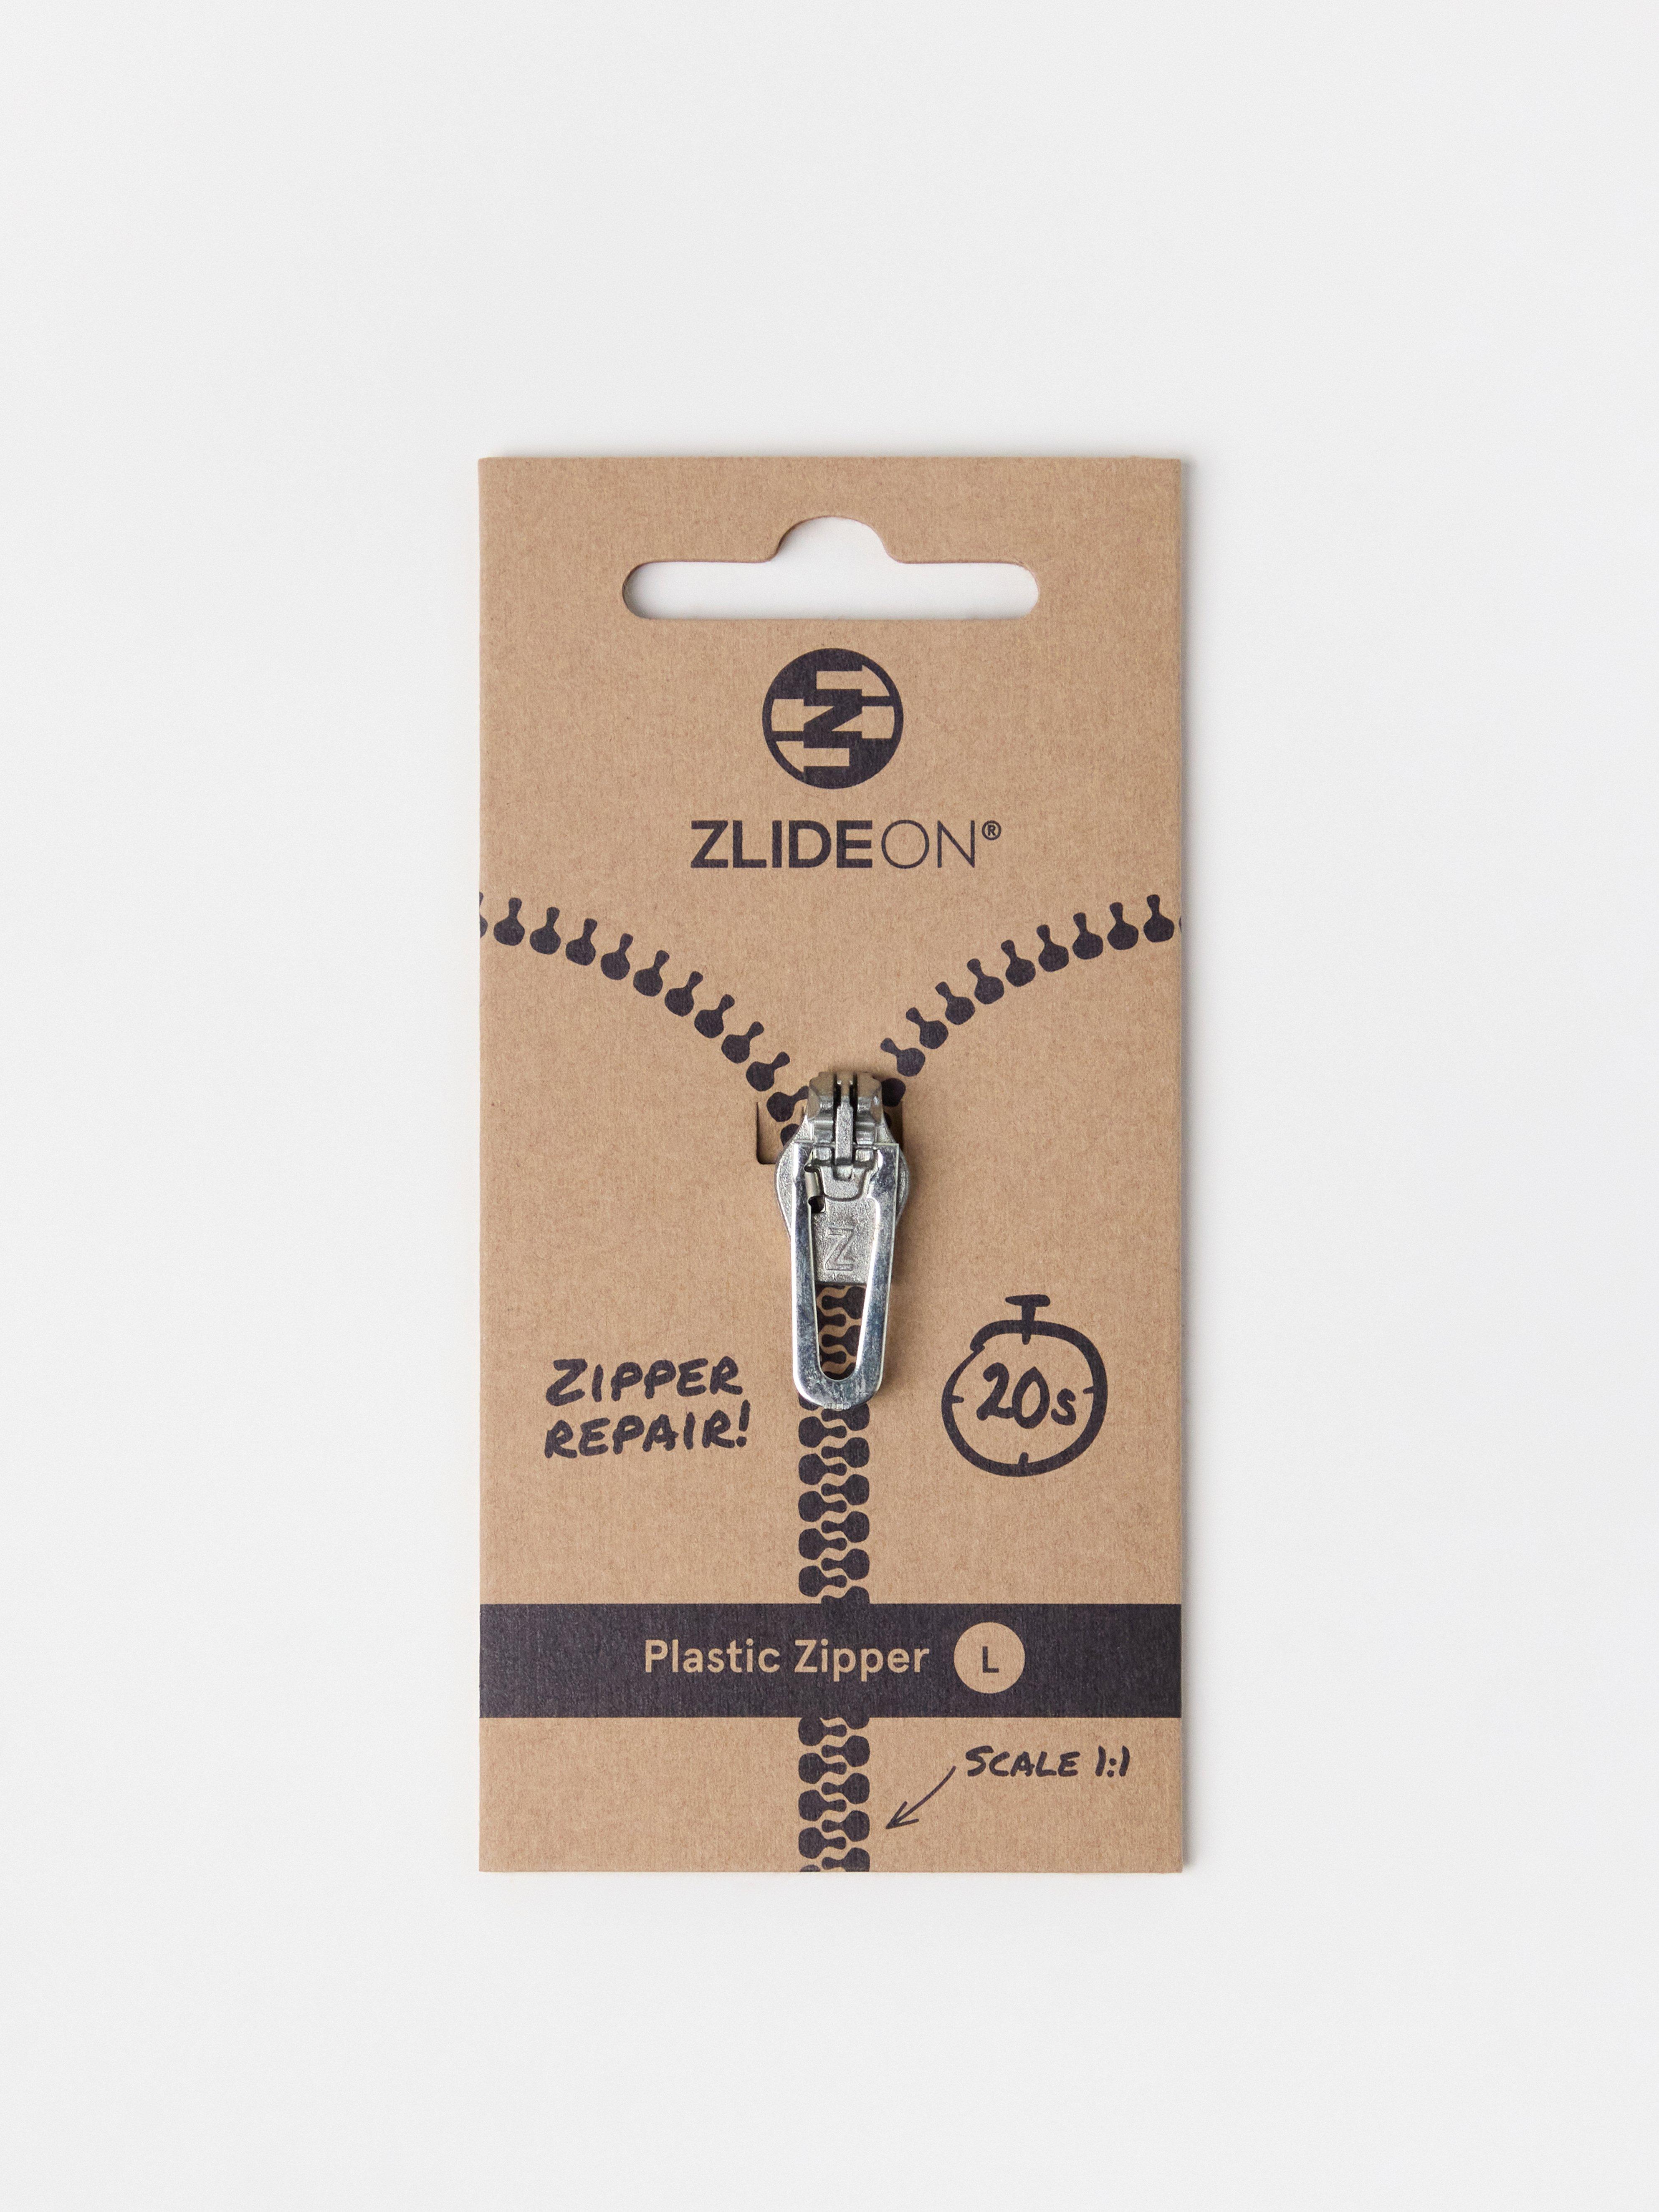 ZlideOn Plastic Zipper Replacement Zipper